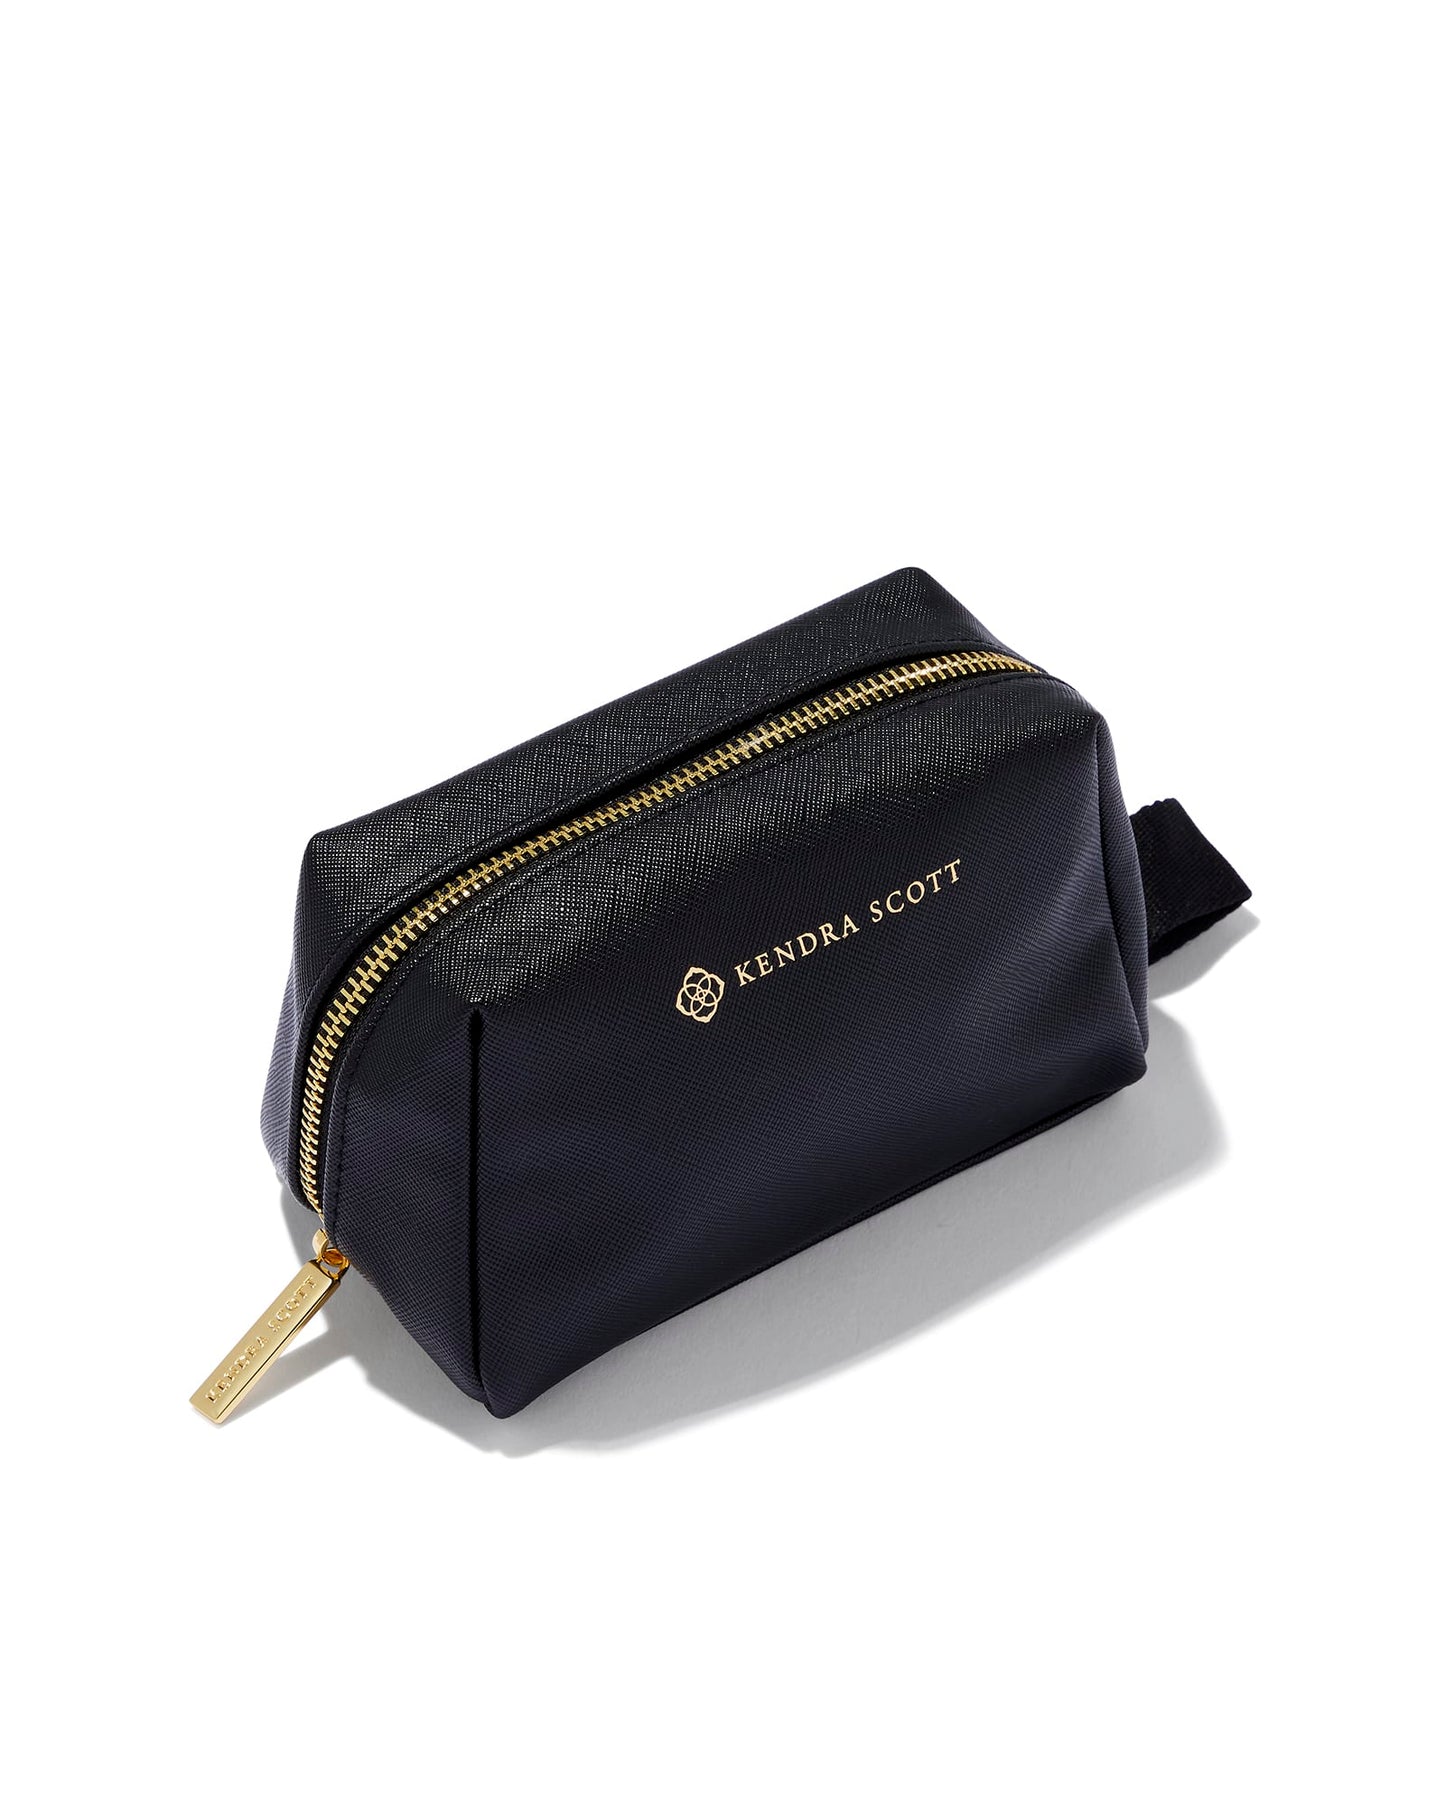 black cosmetic bag with gold zipper and Kendra Scott label MaterialPolyurethane Size6.1" (L) X 3.5" (W) X 3.7" (H)